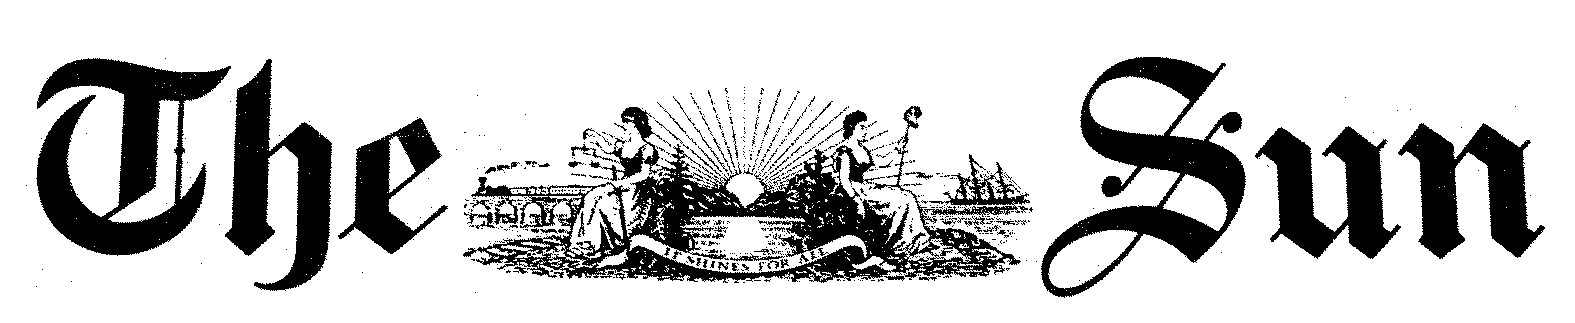 the logotype of the New York Sun newspaper